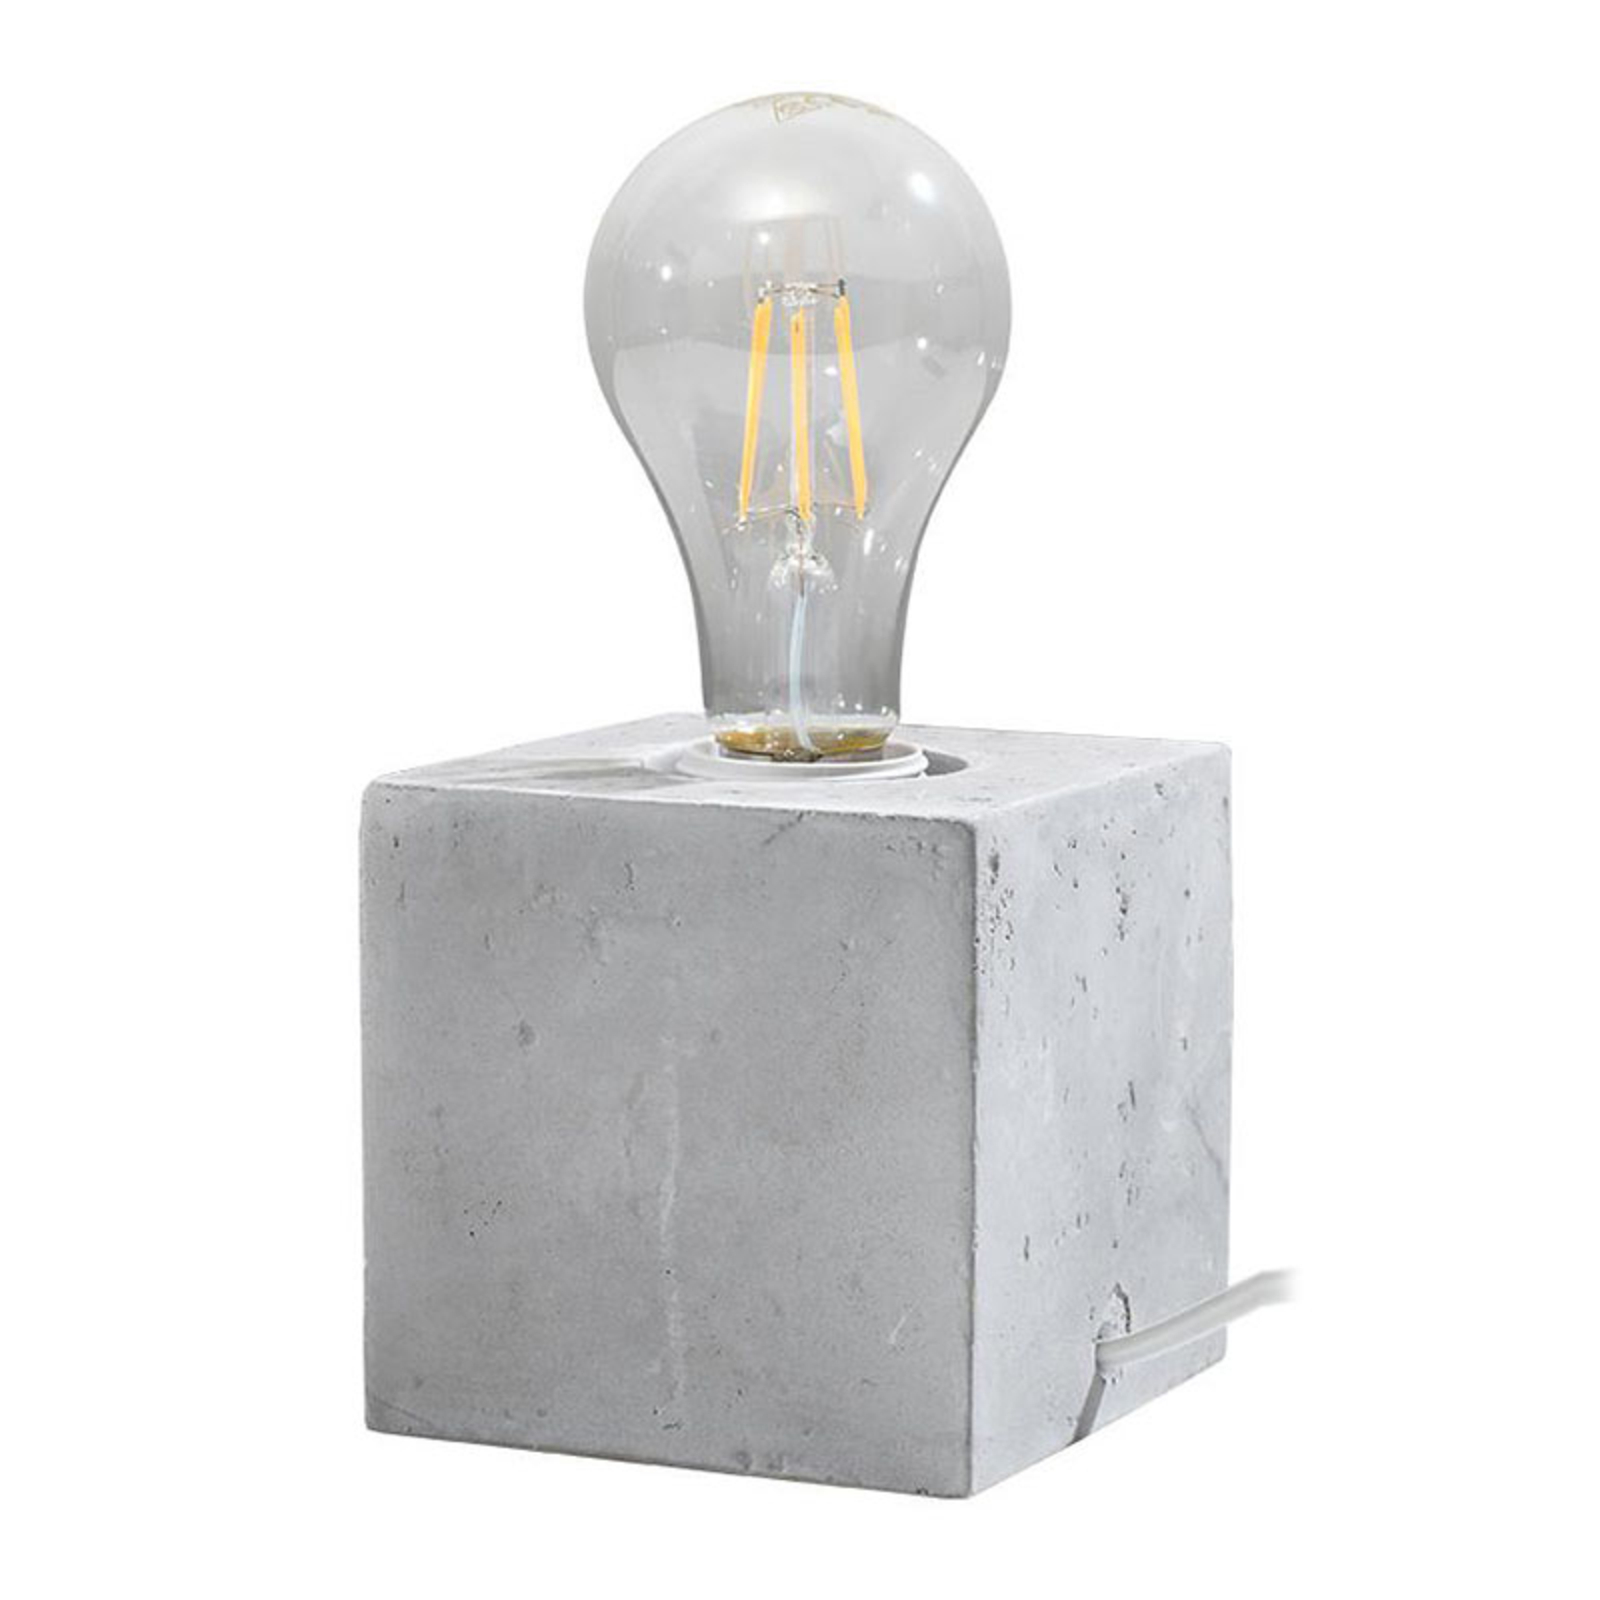 Akira bordslampa i kubform tillverkad av betong